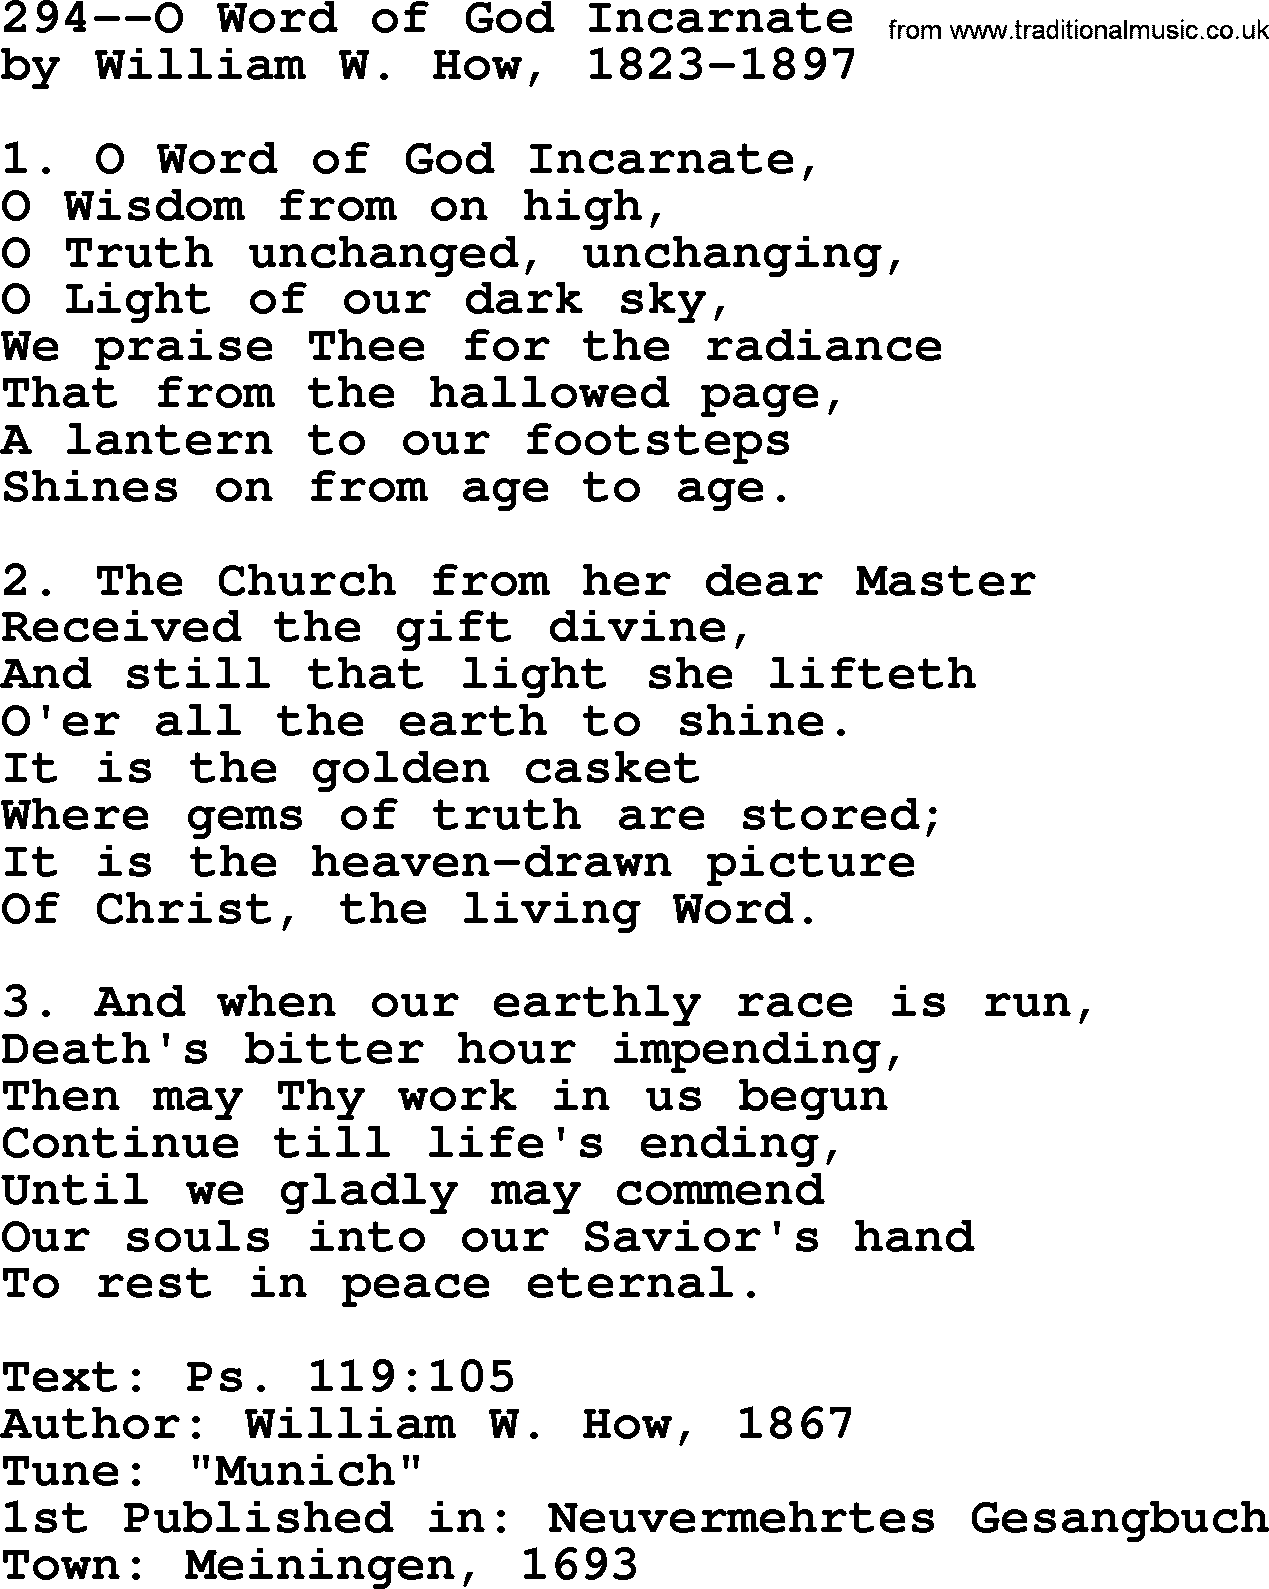 Lutheran Hymn: 294--O Word of God Incarnate.txt lyrics with PDF